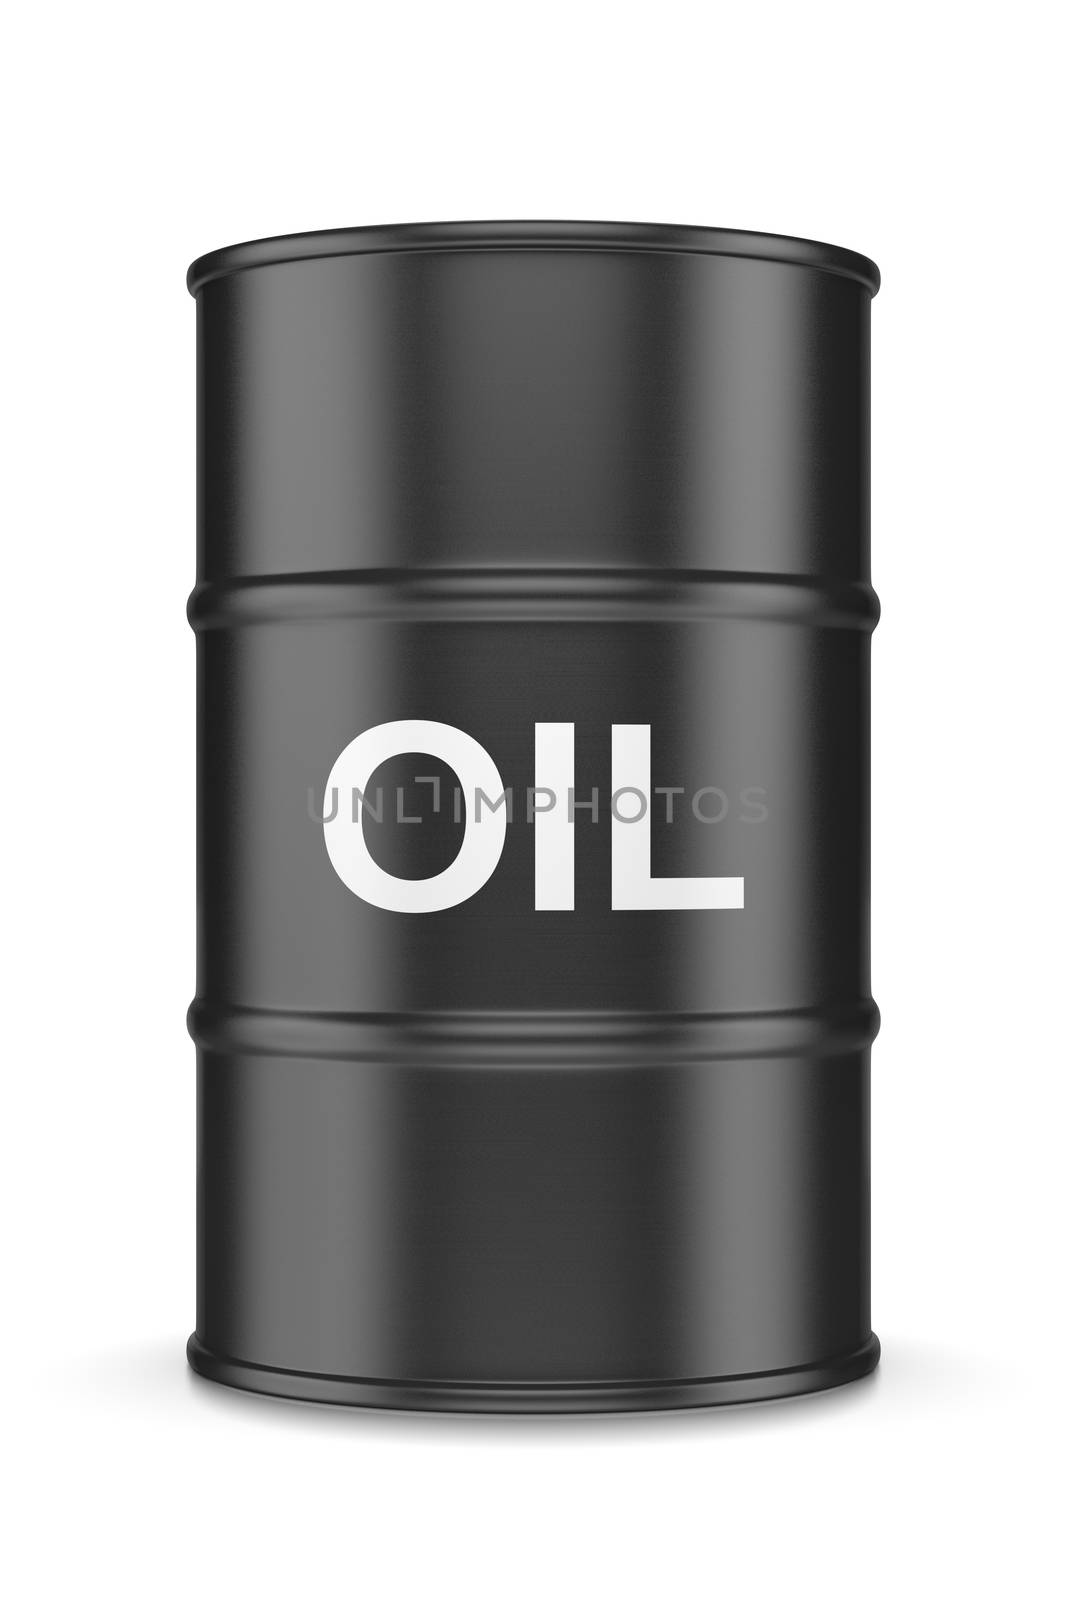 Oil Barrel by make